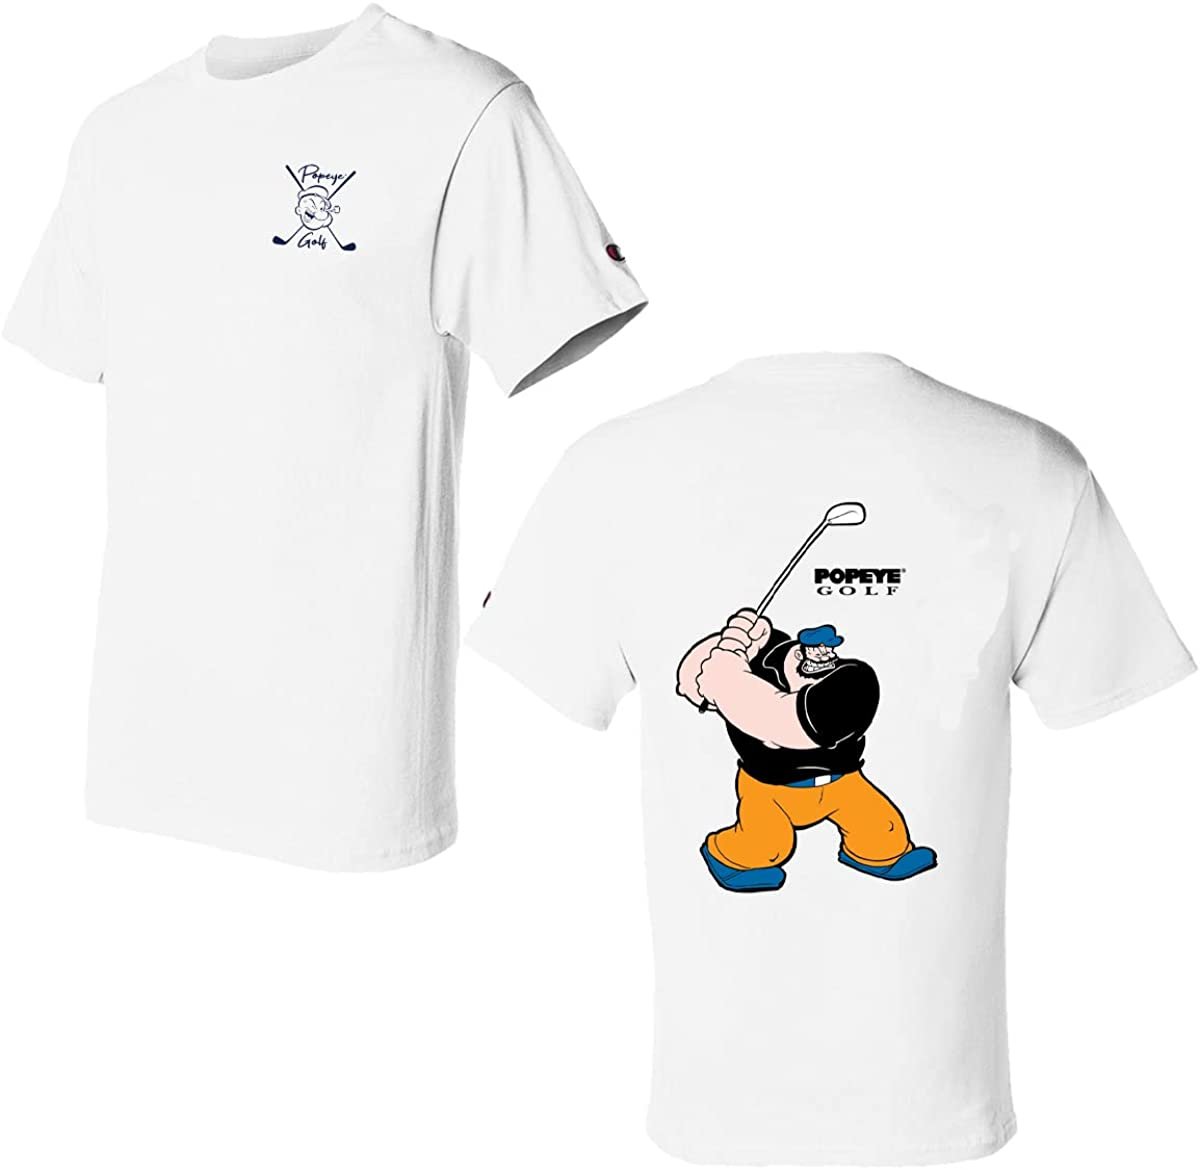 Golf Men's Print T-Shirt – Popeye Golf